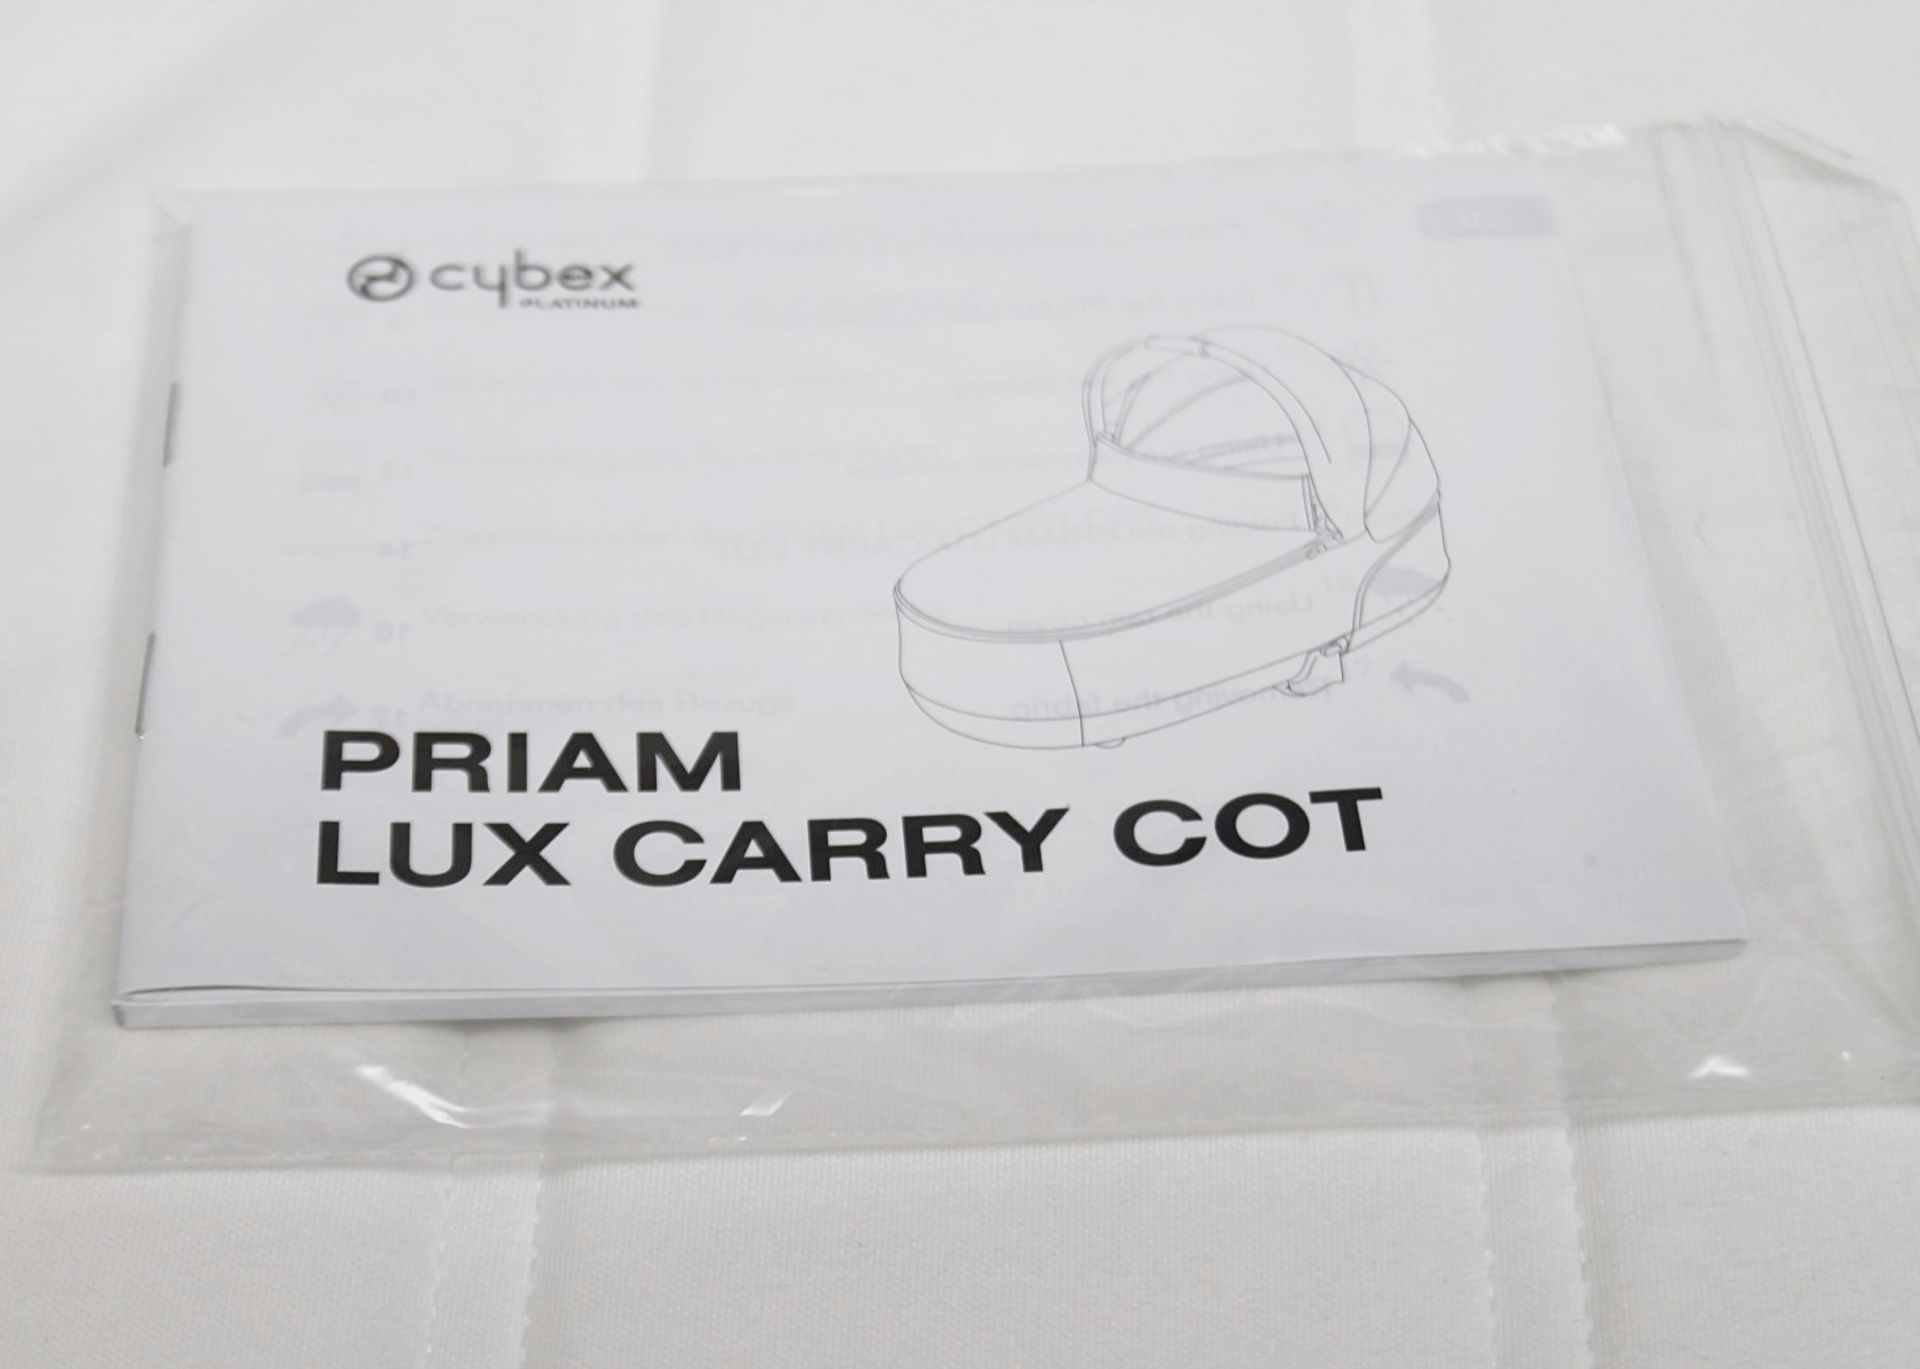 1 x CYBEX 'Priam' Luxury Carrycot In Black - Original Price £329.95 - Unused Boxed Stock - Image 3 of 19